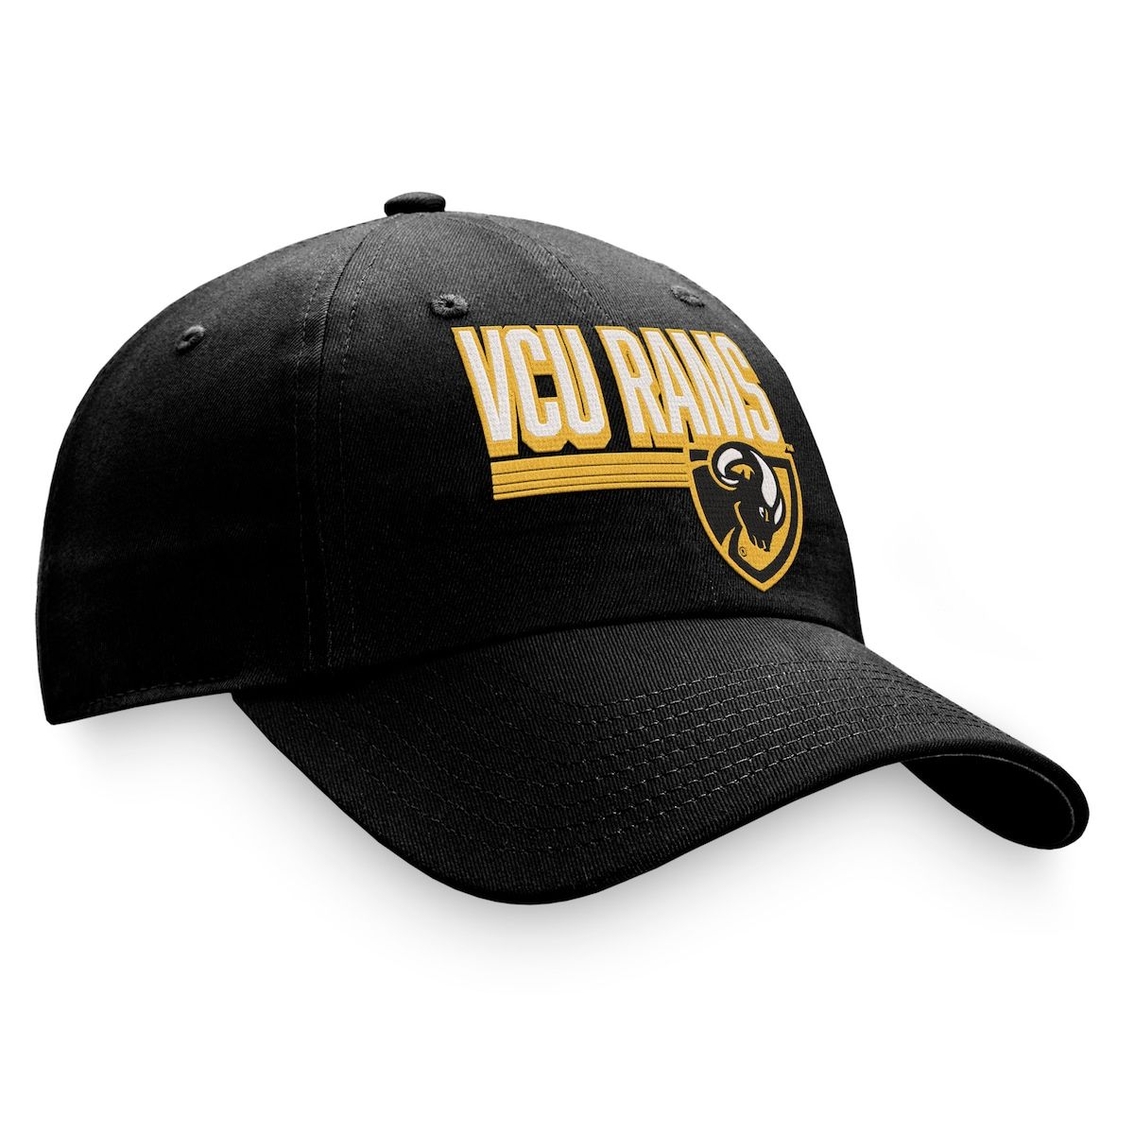 Men's Top Of The World Black Vcu Rams Slice Adjustable Hat | Hats ...